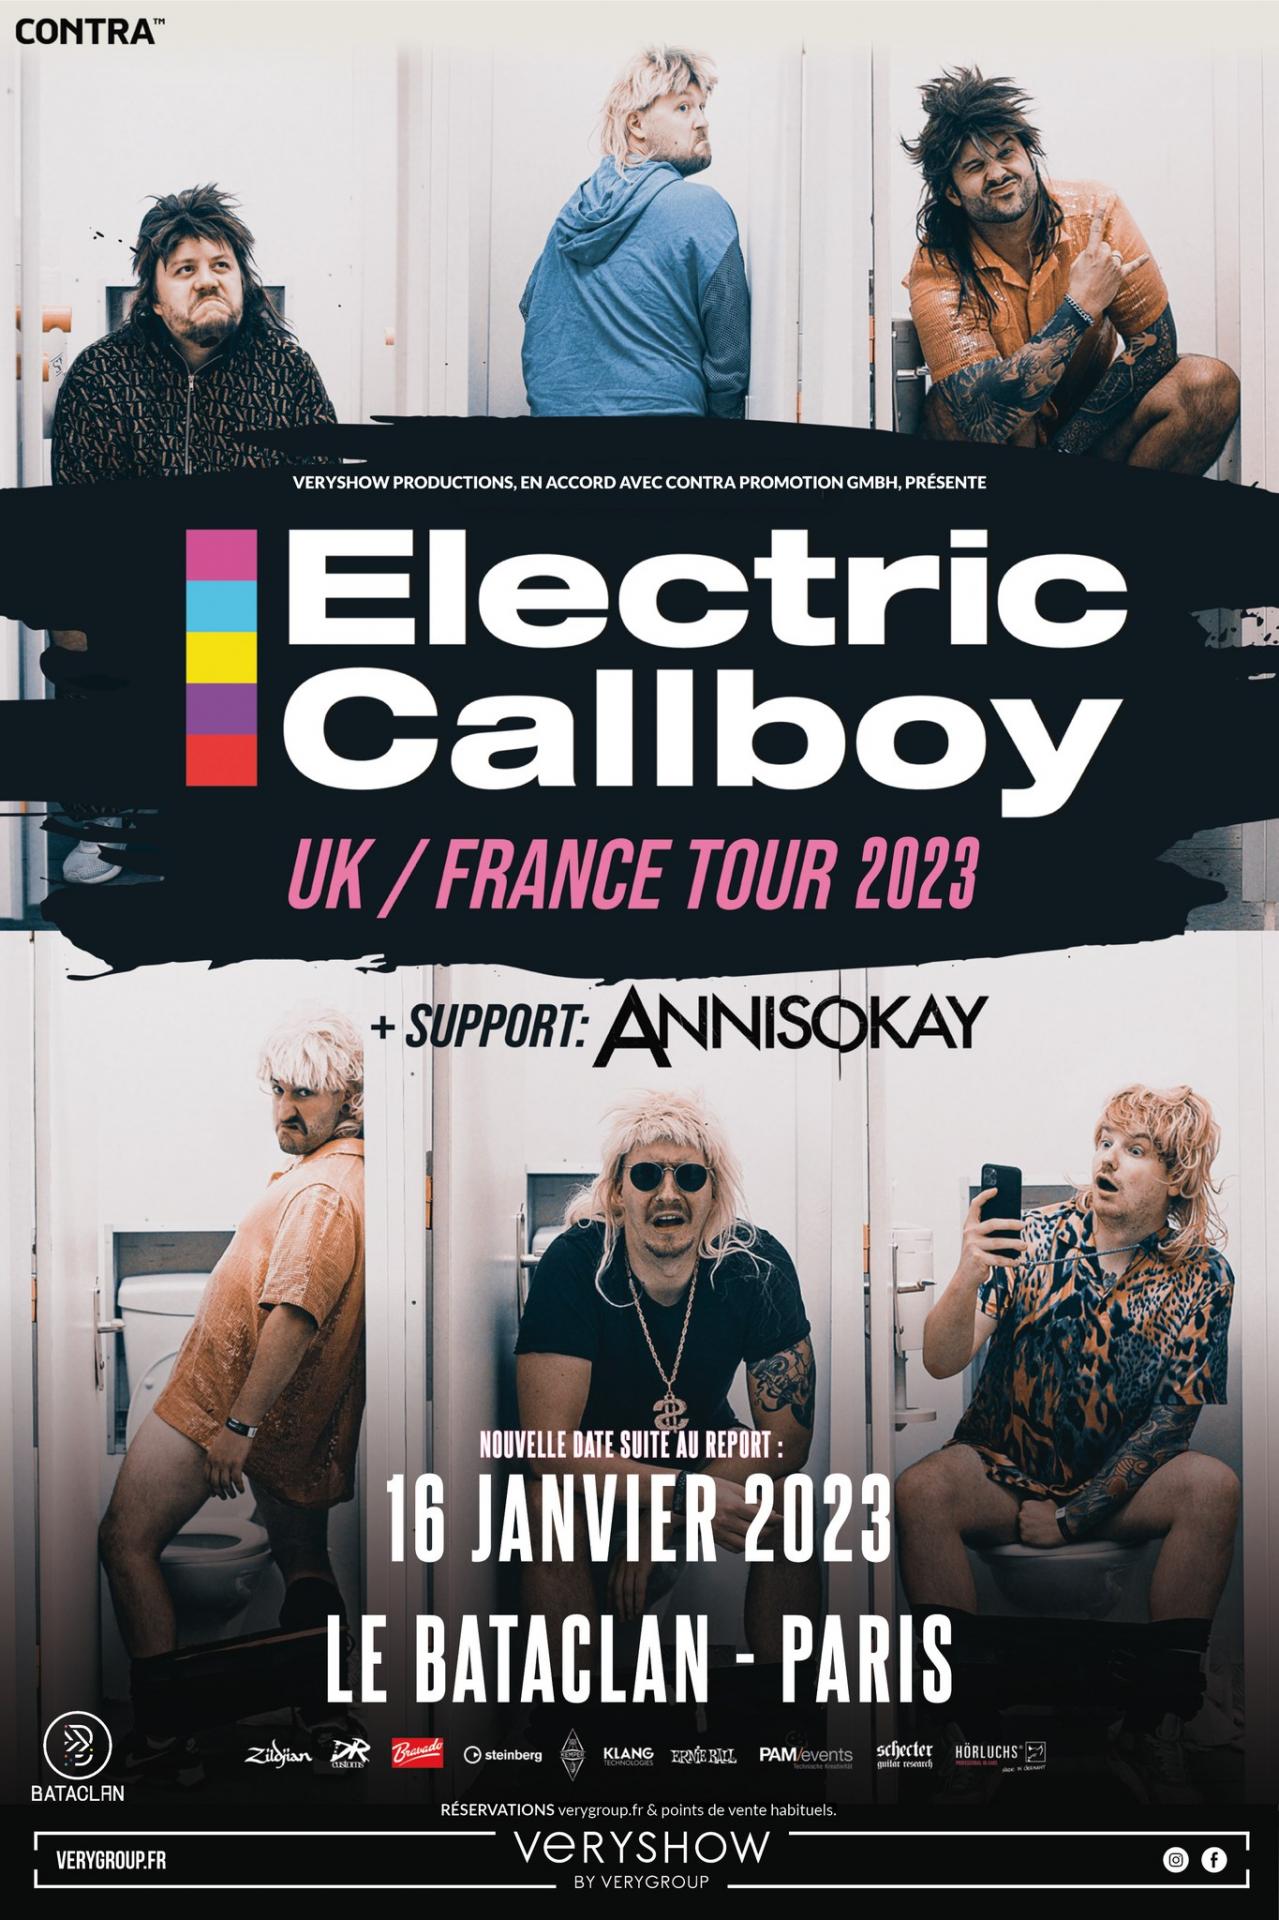 Electric callboy jan 2023